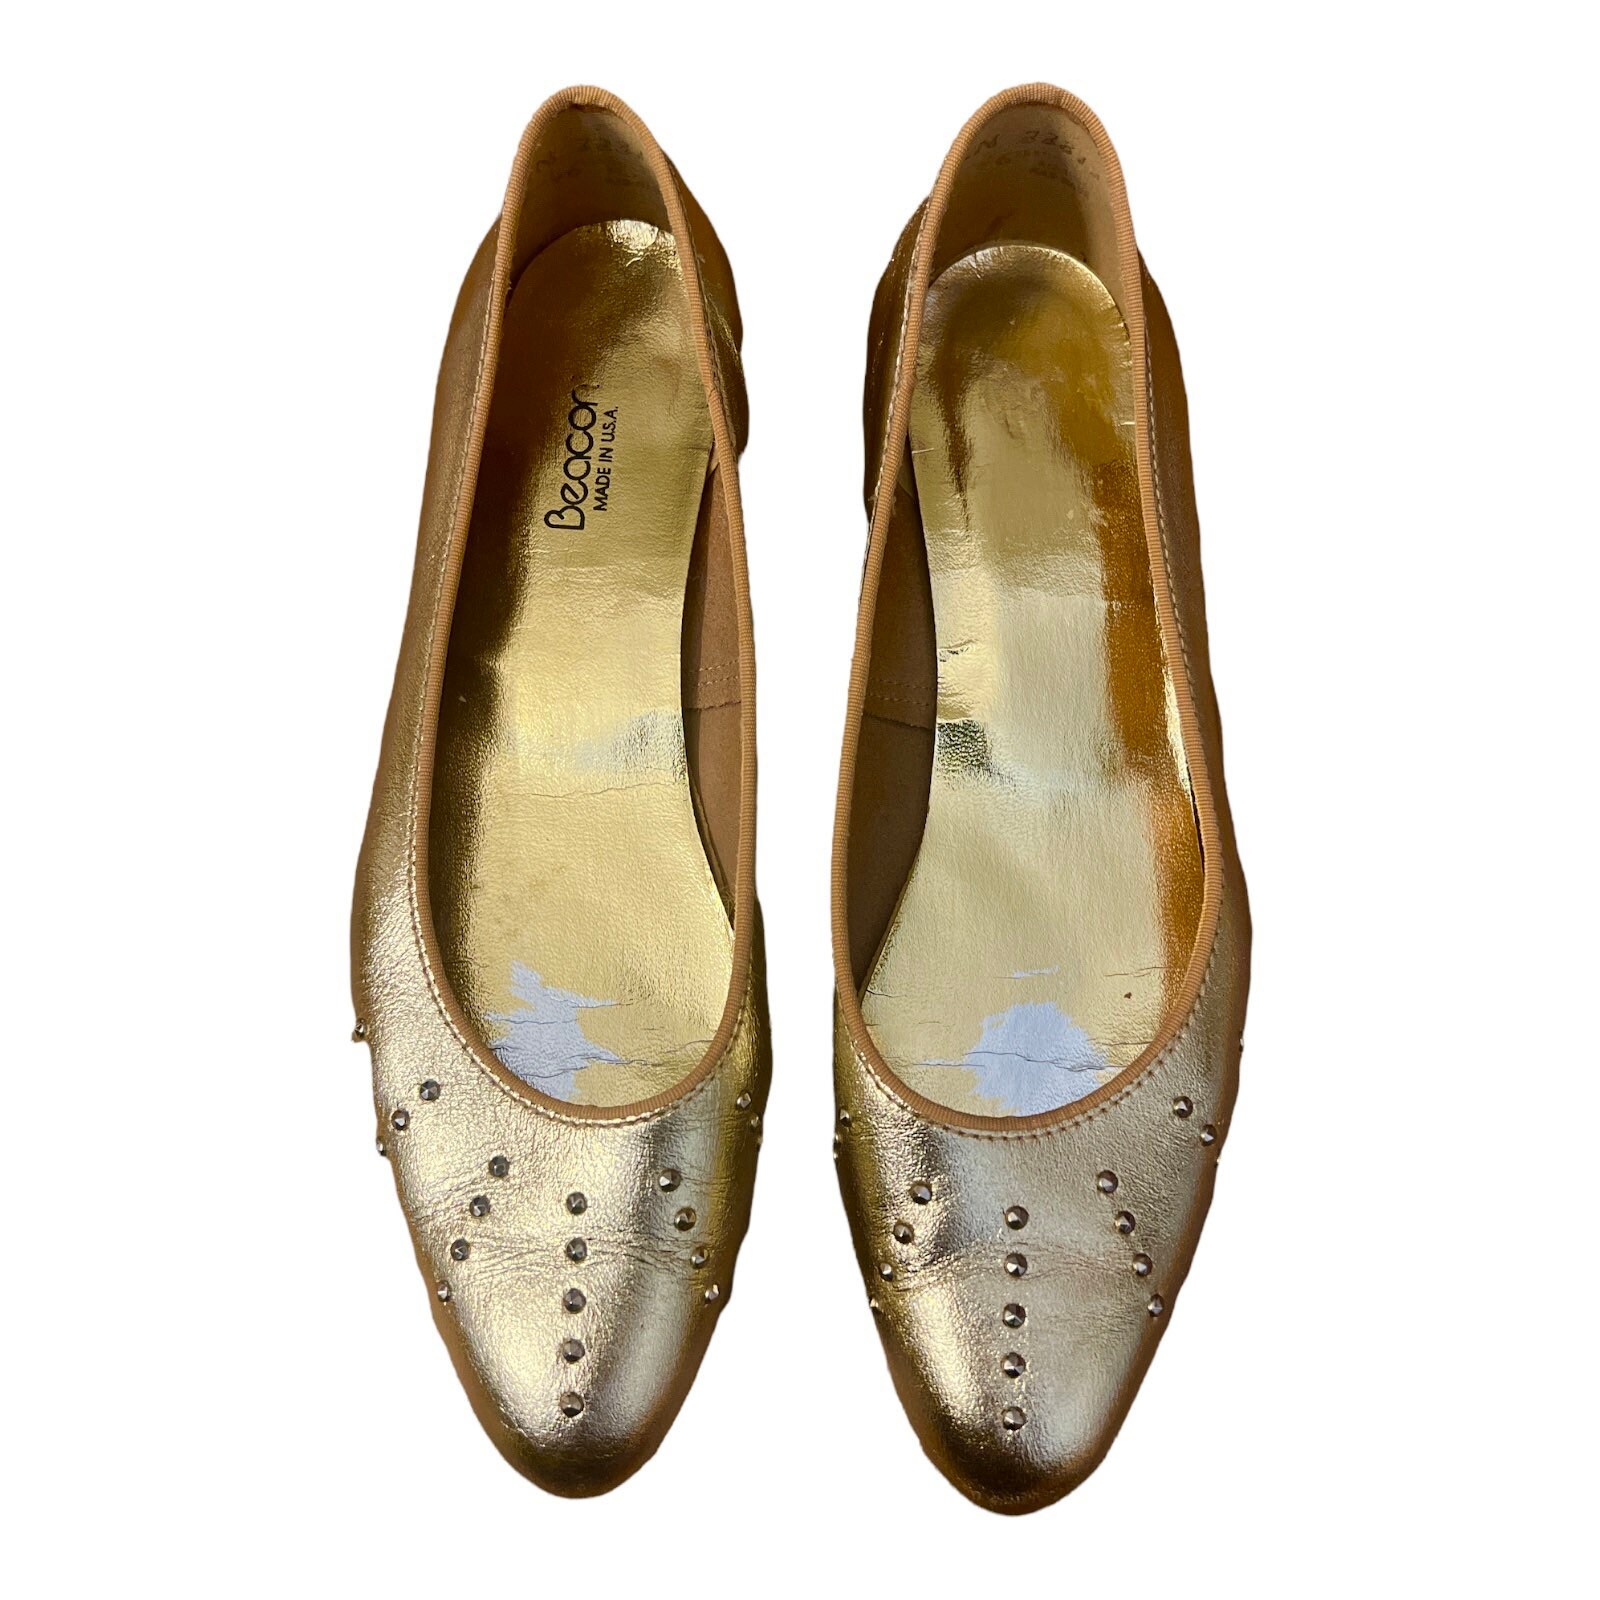 Shoes Womens Shoes Slip Ons Ballet Shoes Vintage flat ballet shoes bronze leather size 10 US 40 EU funky retro 90s 80s 